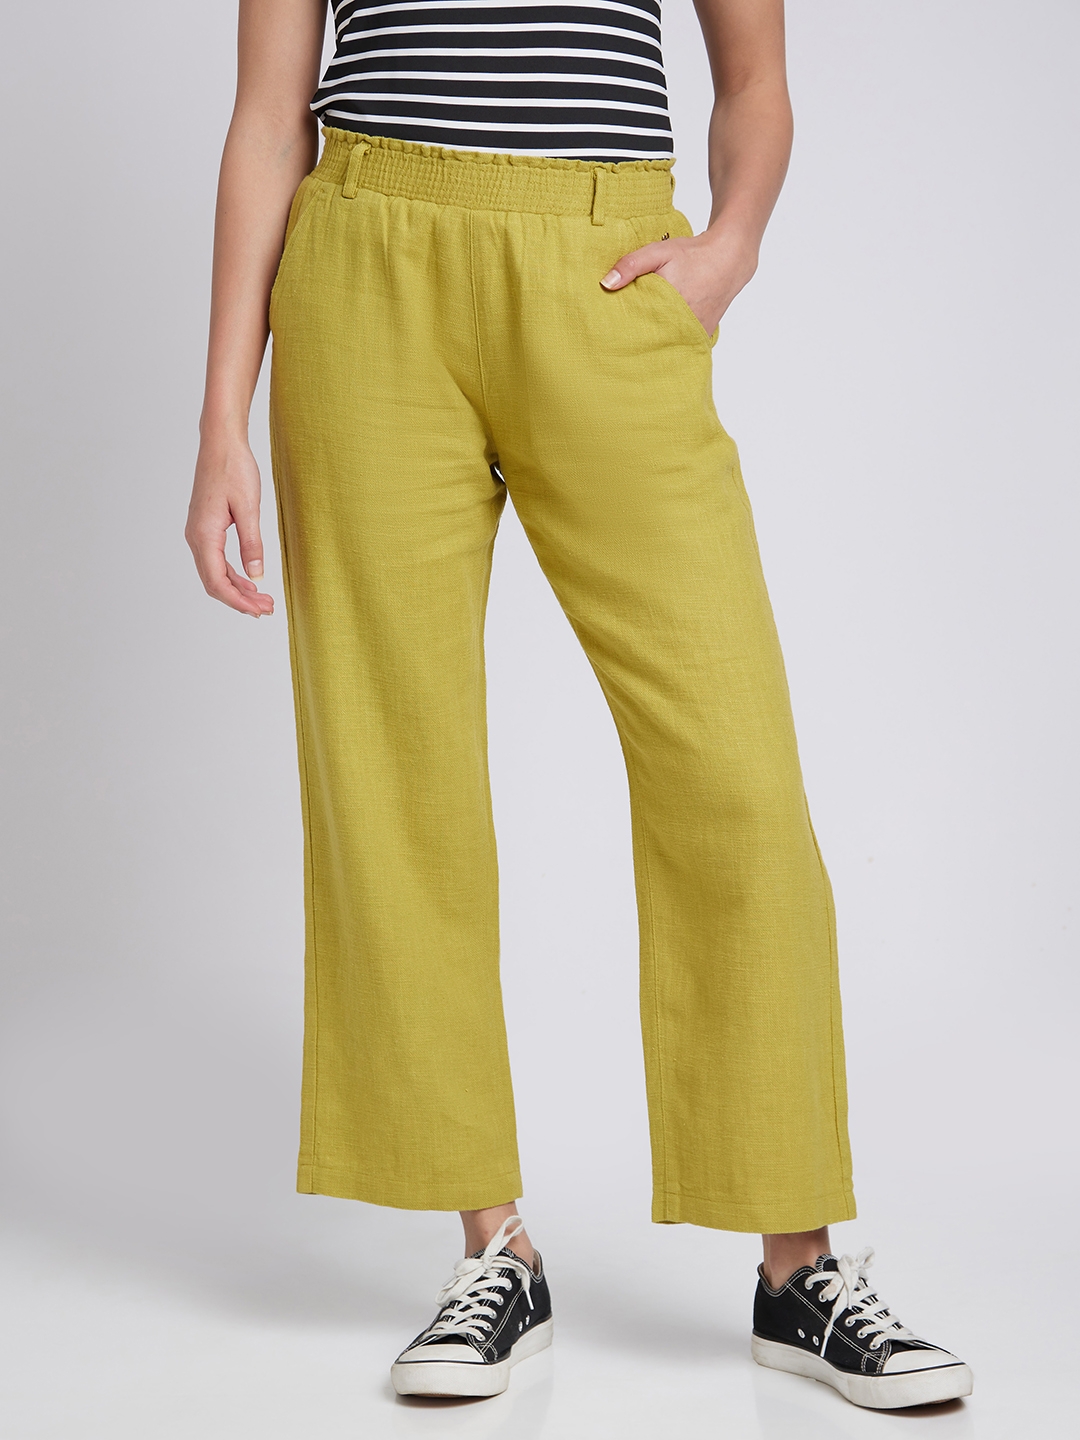 spykar | Women's Yellow Linen Solid Trousers